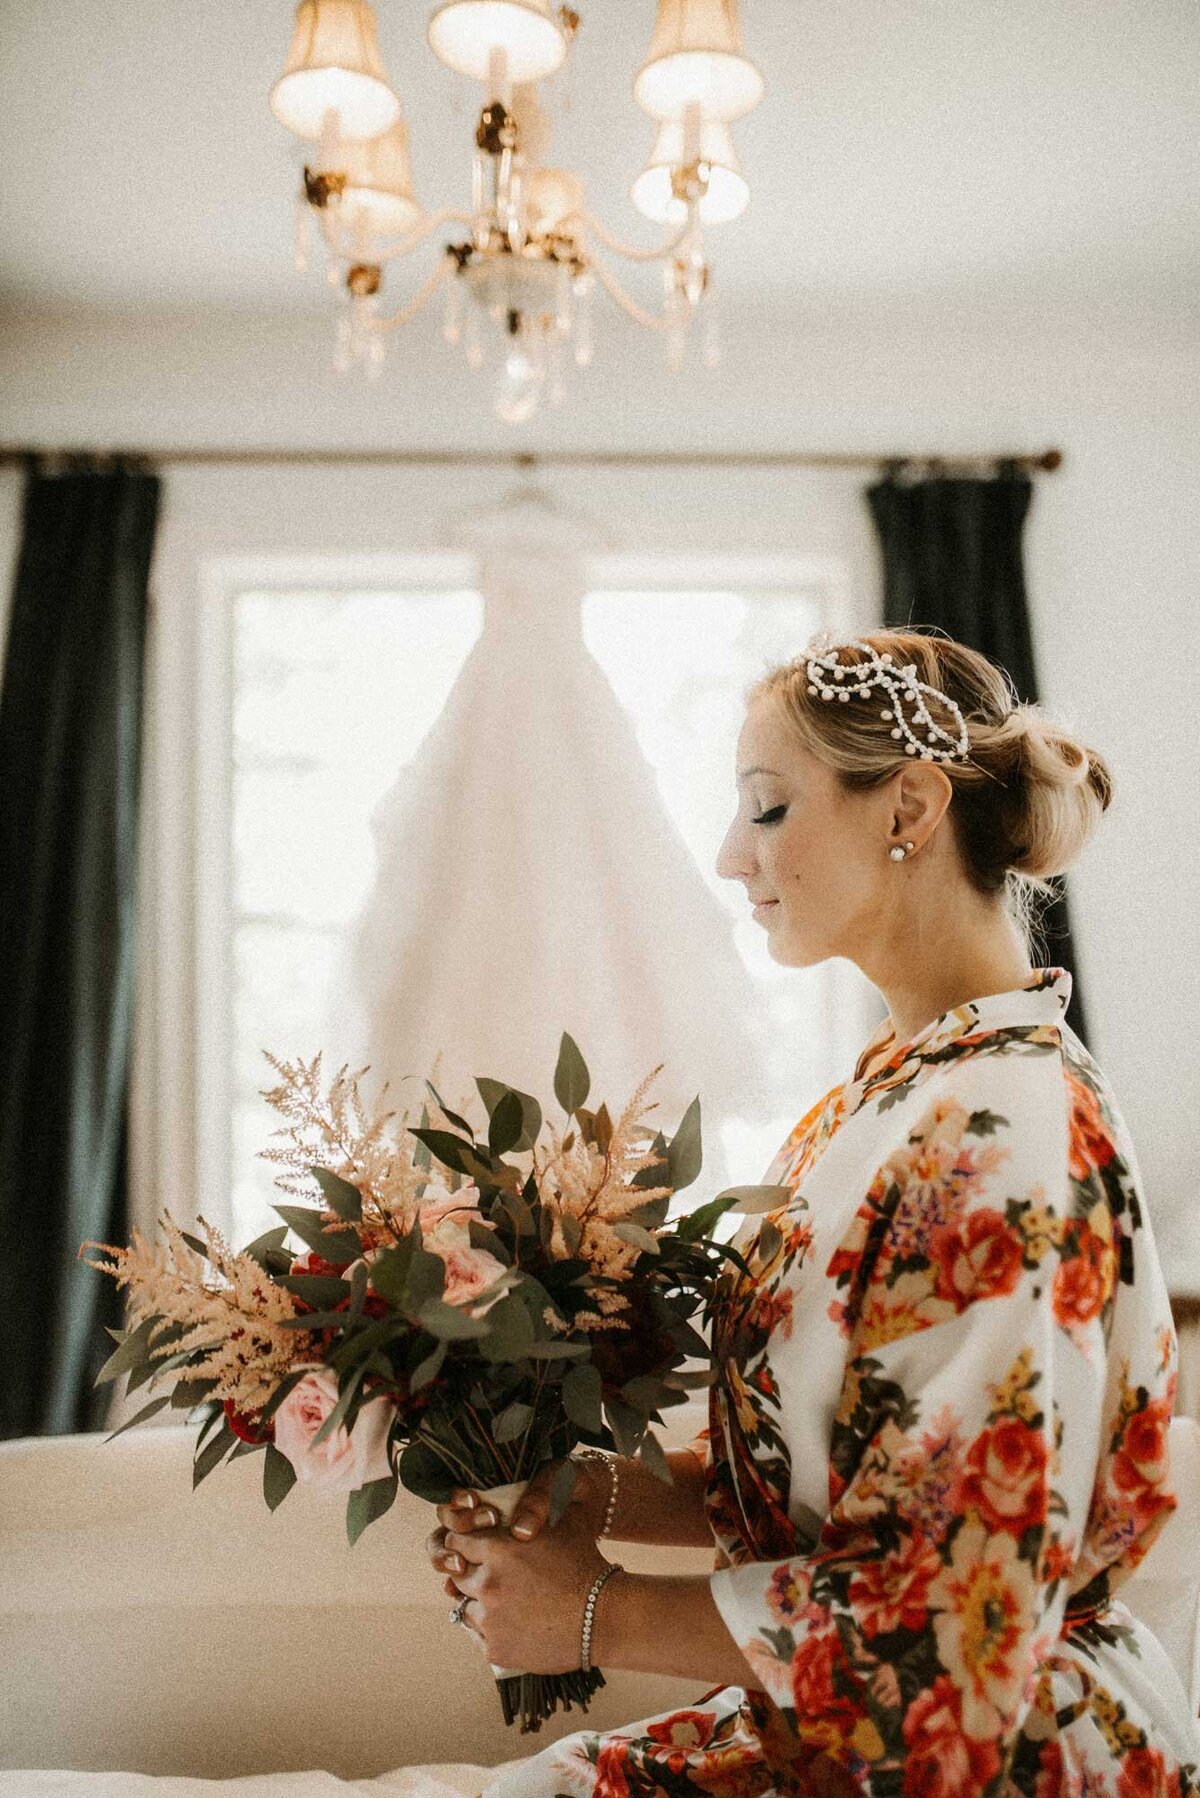 bride-holding-flowers-getting-ready-bridal-suite-st-louis-missouri